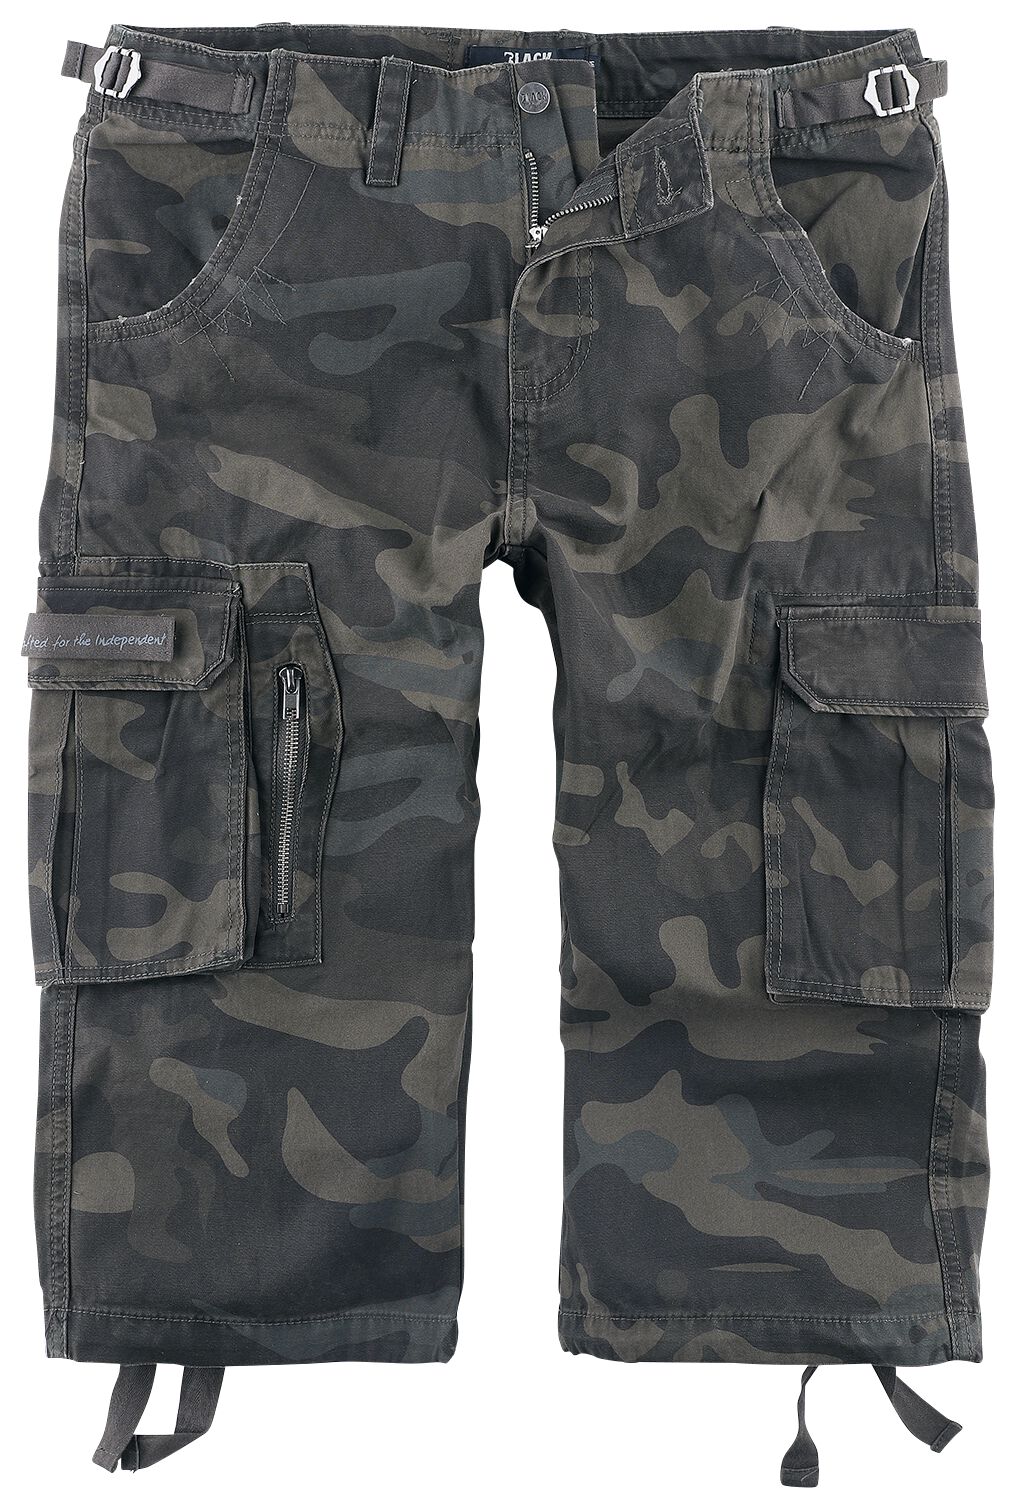 Black Premium by EMP 3/4 Army Vintage Shorts Short darkcamo in XL